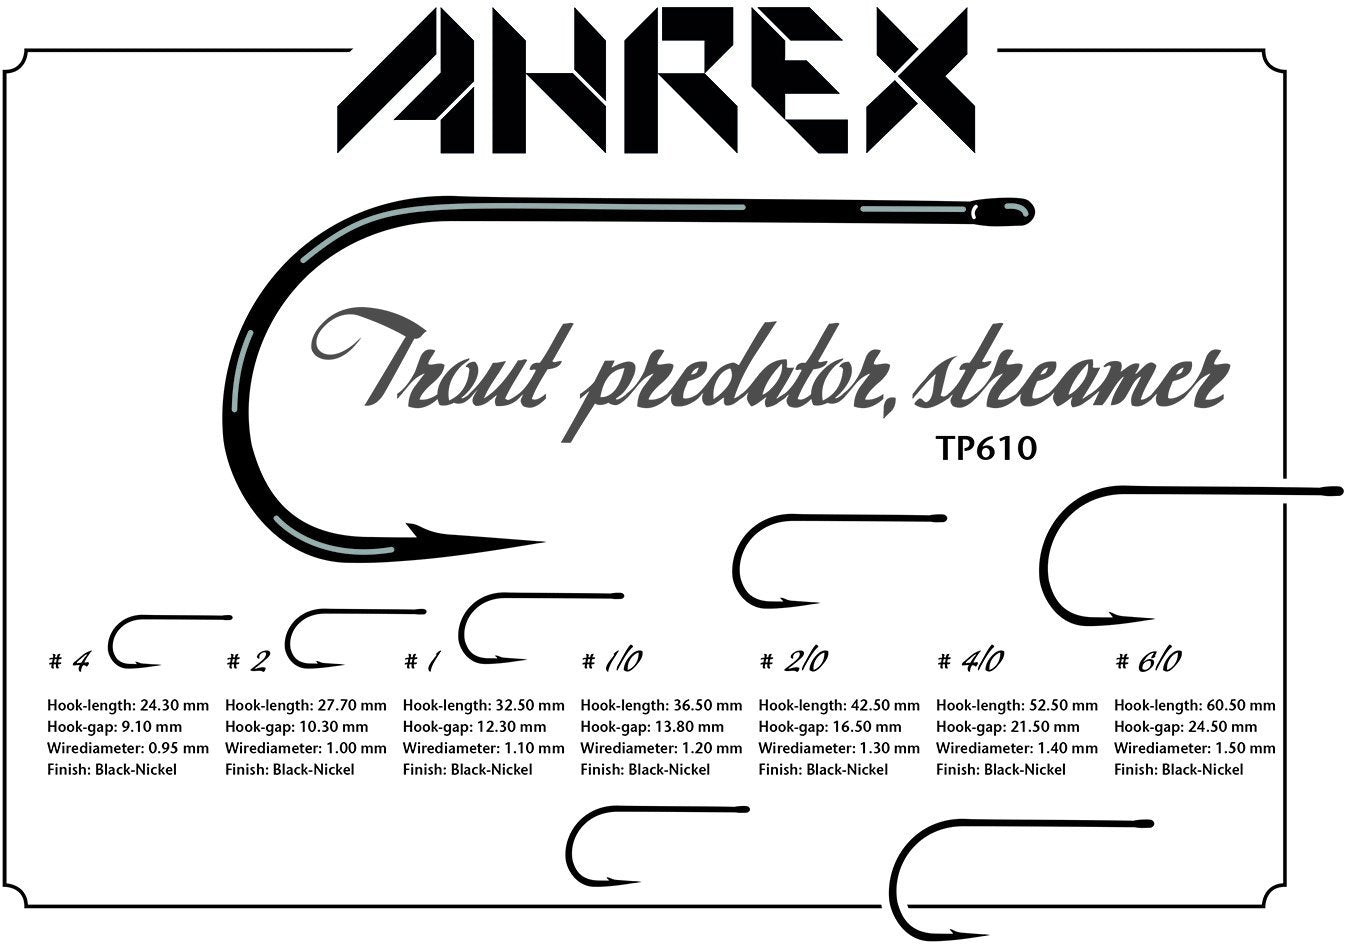 Ahrex TP610 Trout Predator Streamer_2